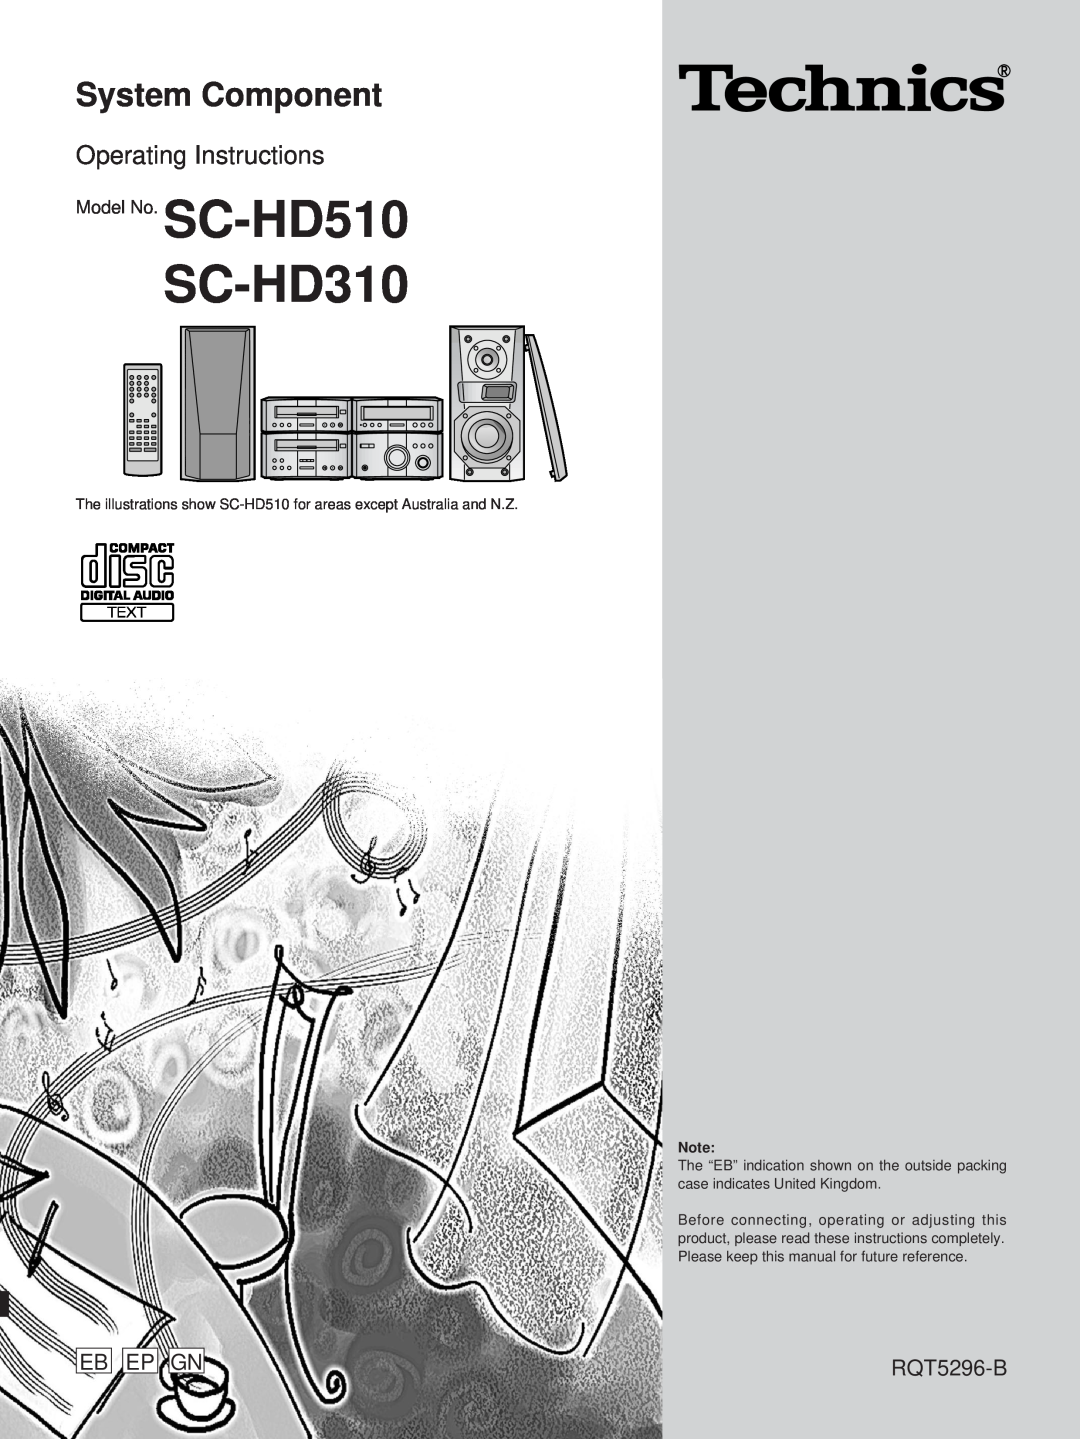 Technics SC-HD310, SC-HD510 manual System Component, Operating Instructions, Eb Ep Gn, RQT5296-B 